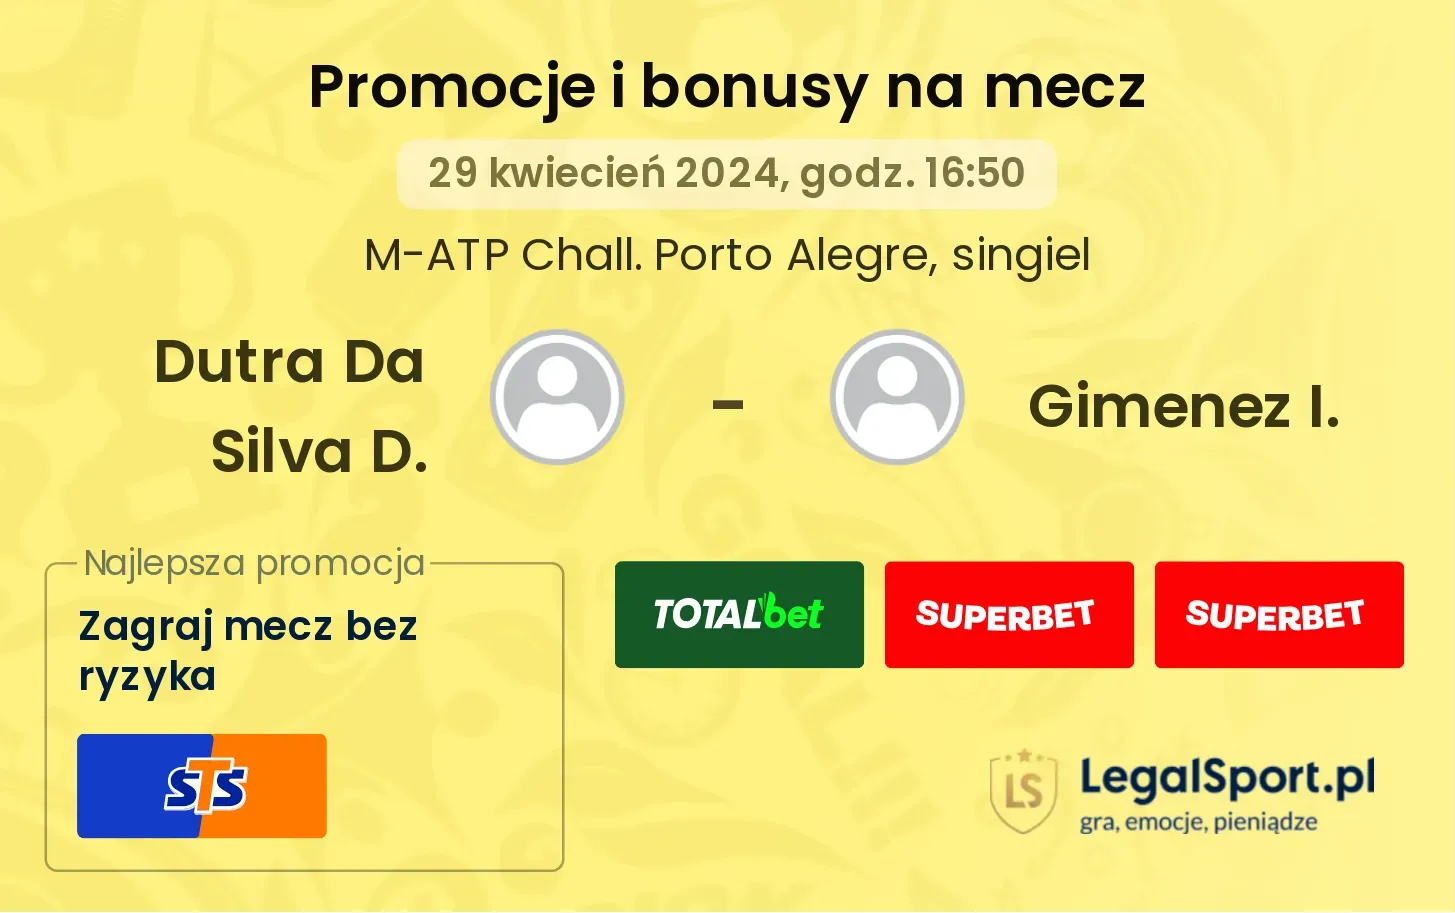 Dutra Da Silva D. - Gimenez I. promocje bonusy na mecz